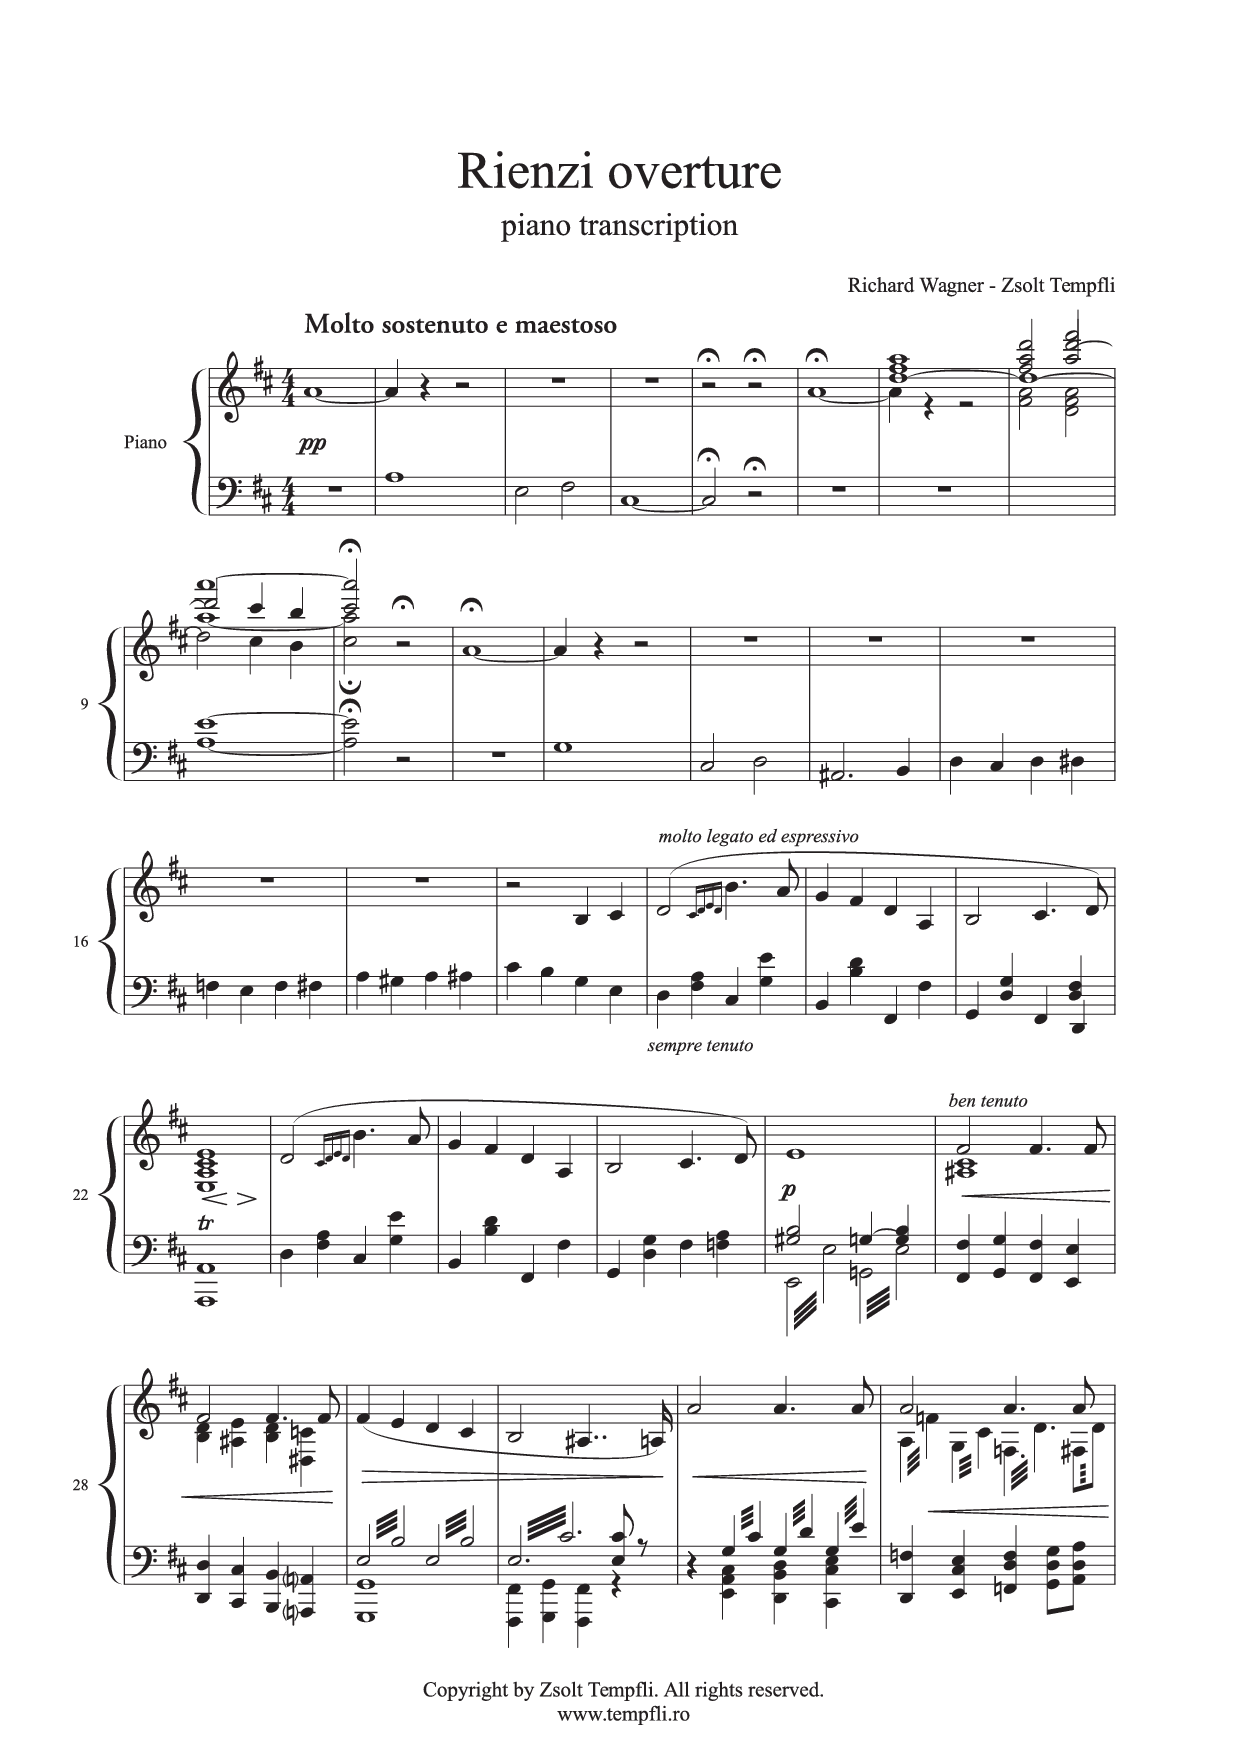 Tempfli Zsolt - Richard Wagner Rienzi nyitány zongoraátirat